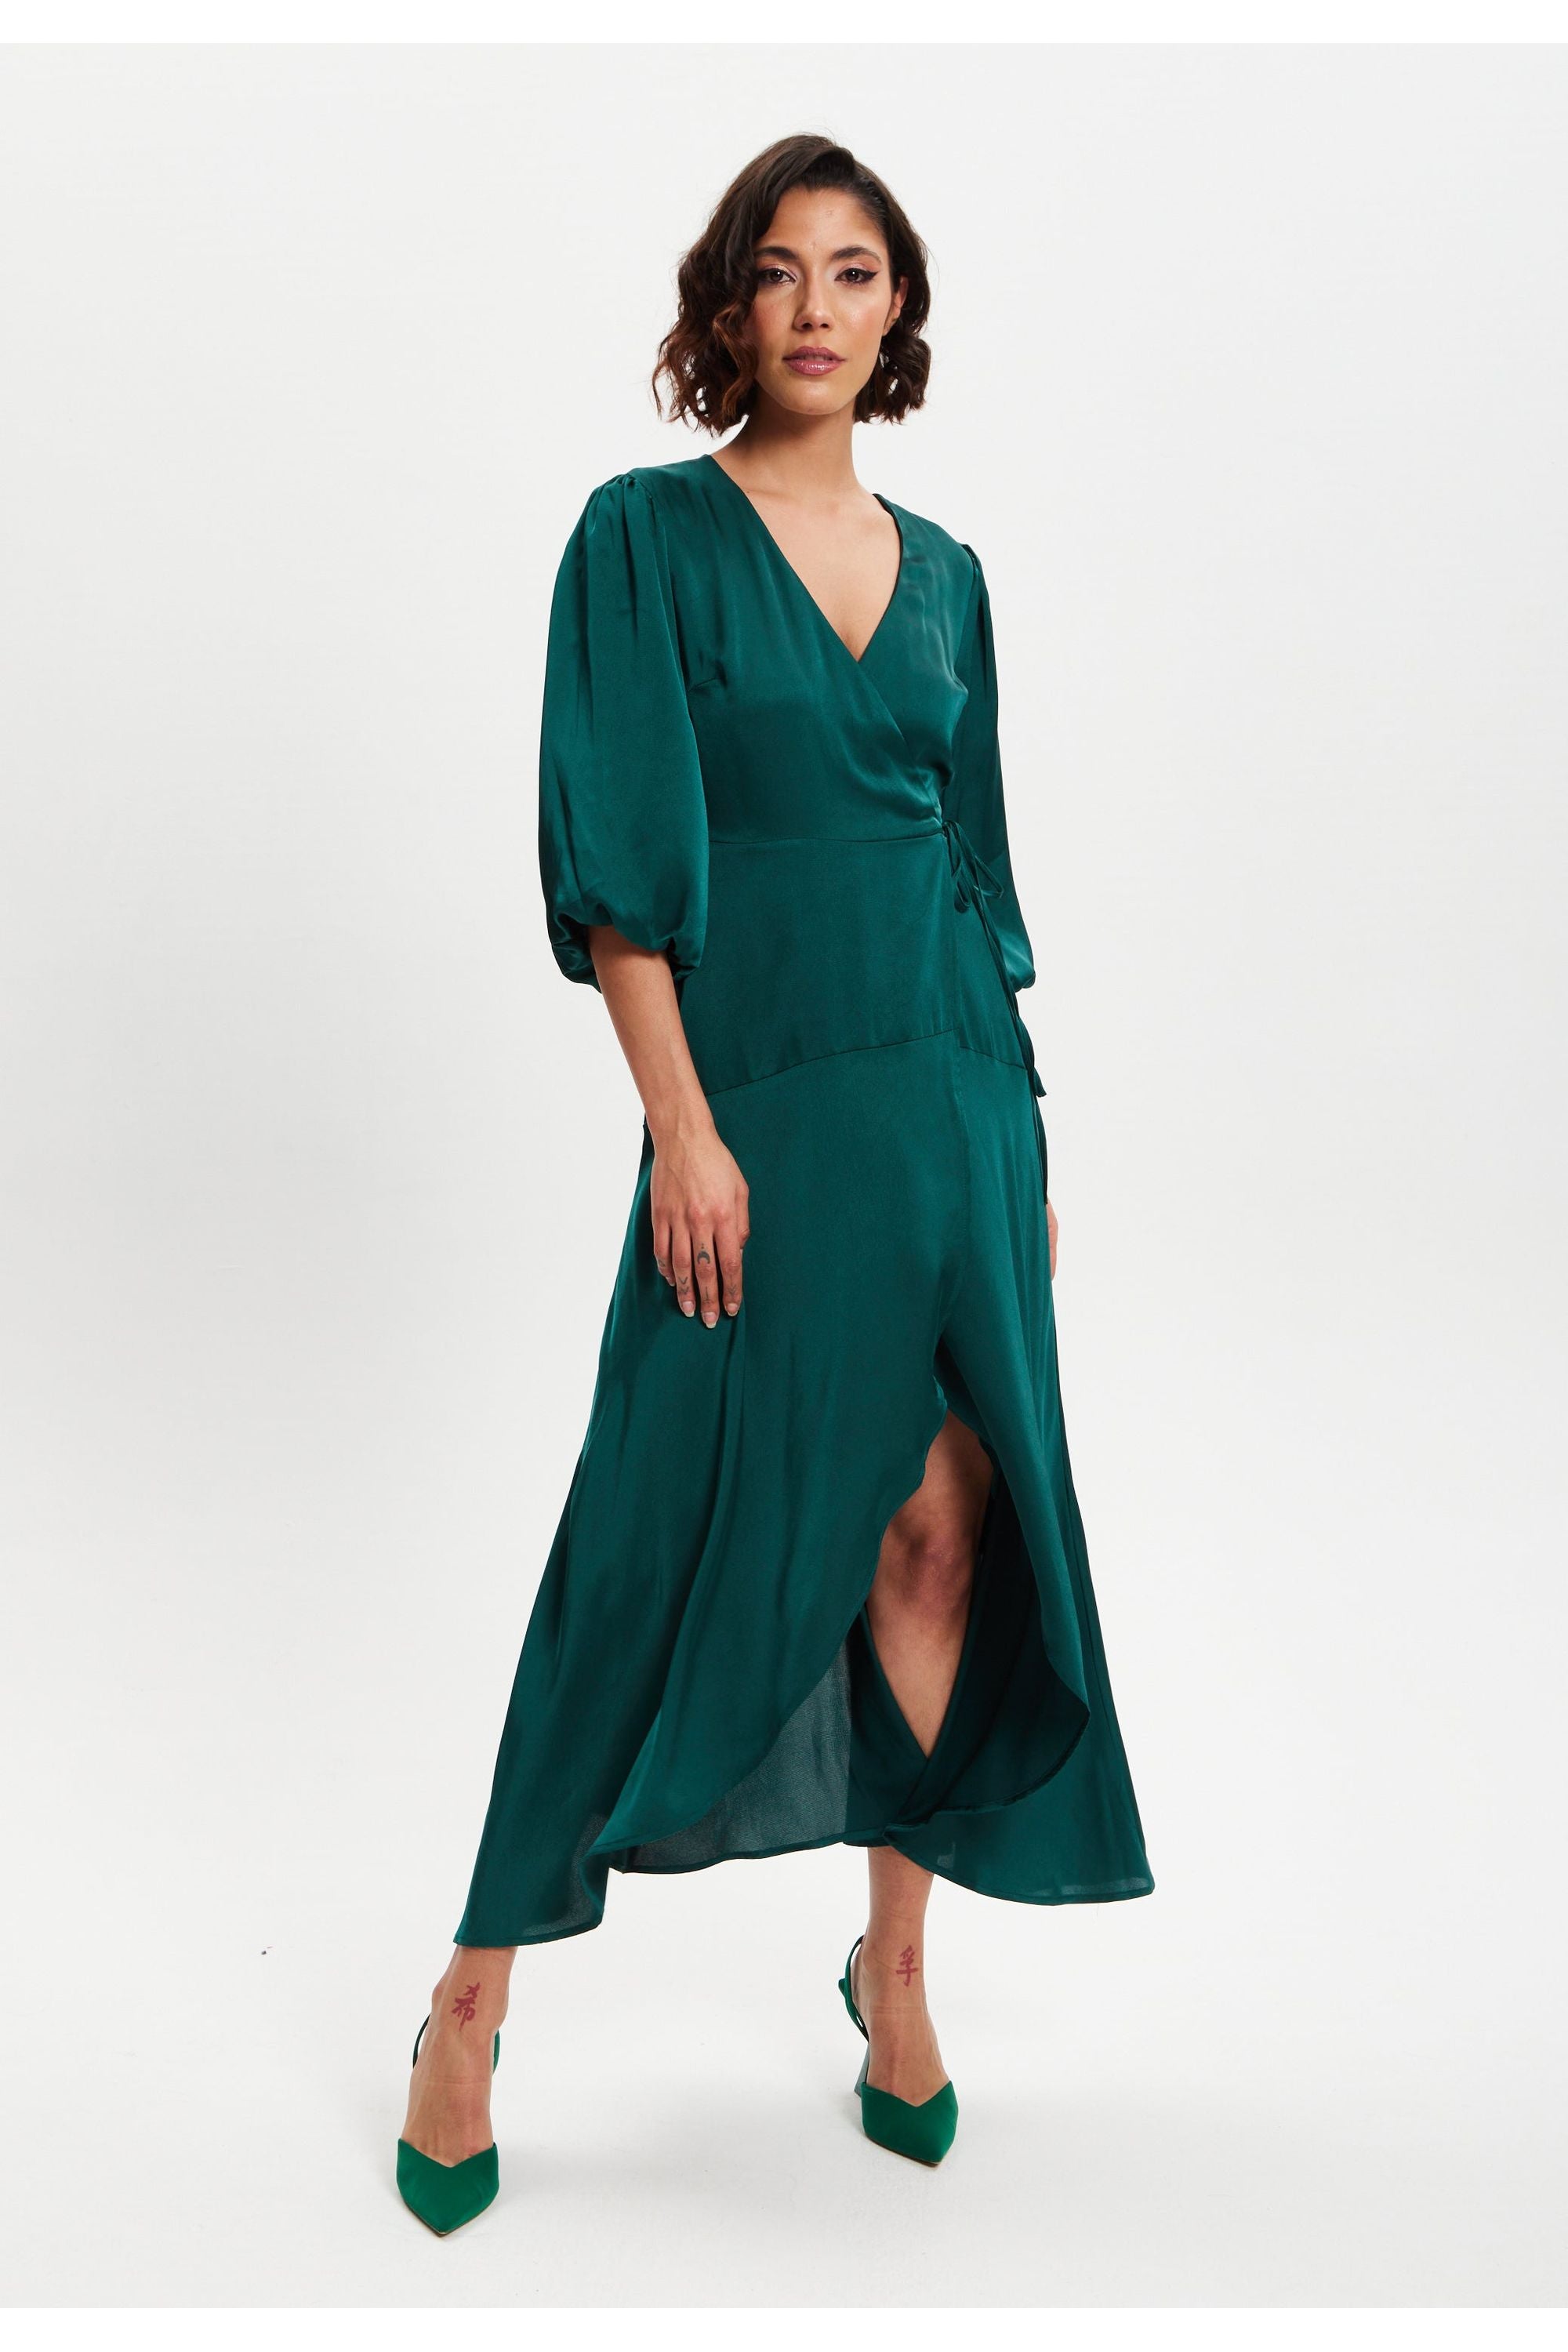 Dark Green Midi Wrap Dress With Short Puff Sleeves LIQ20-128DarkGreen